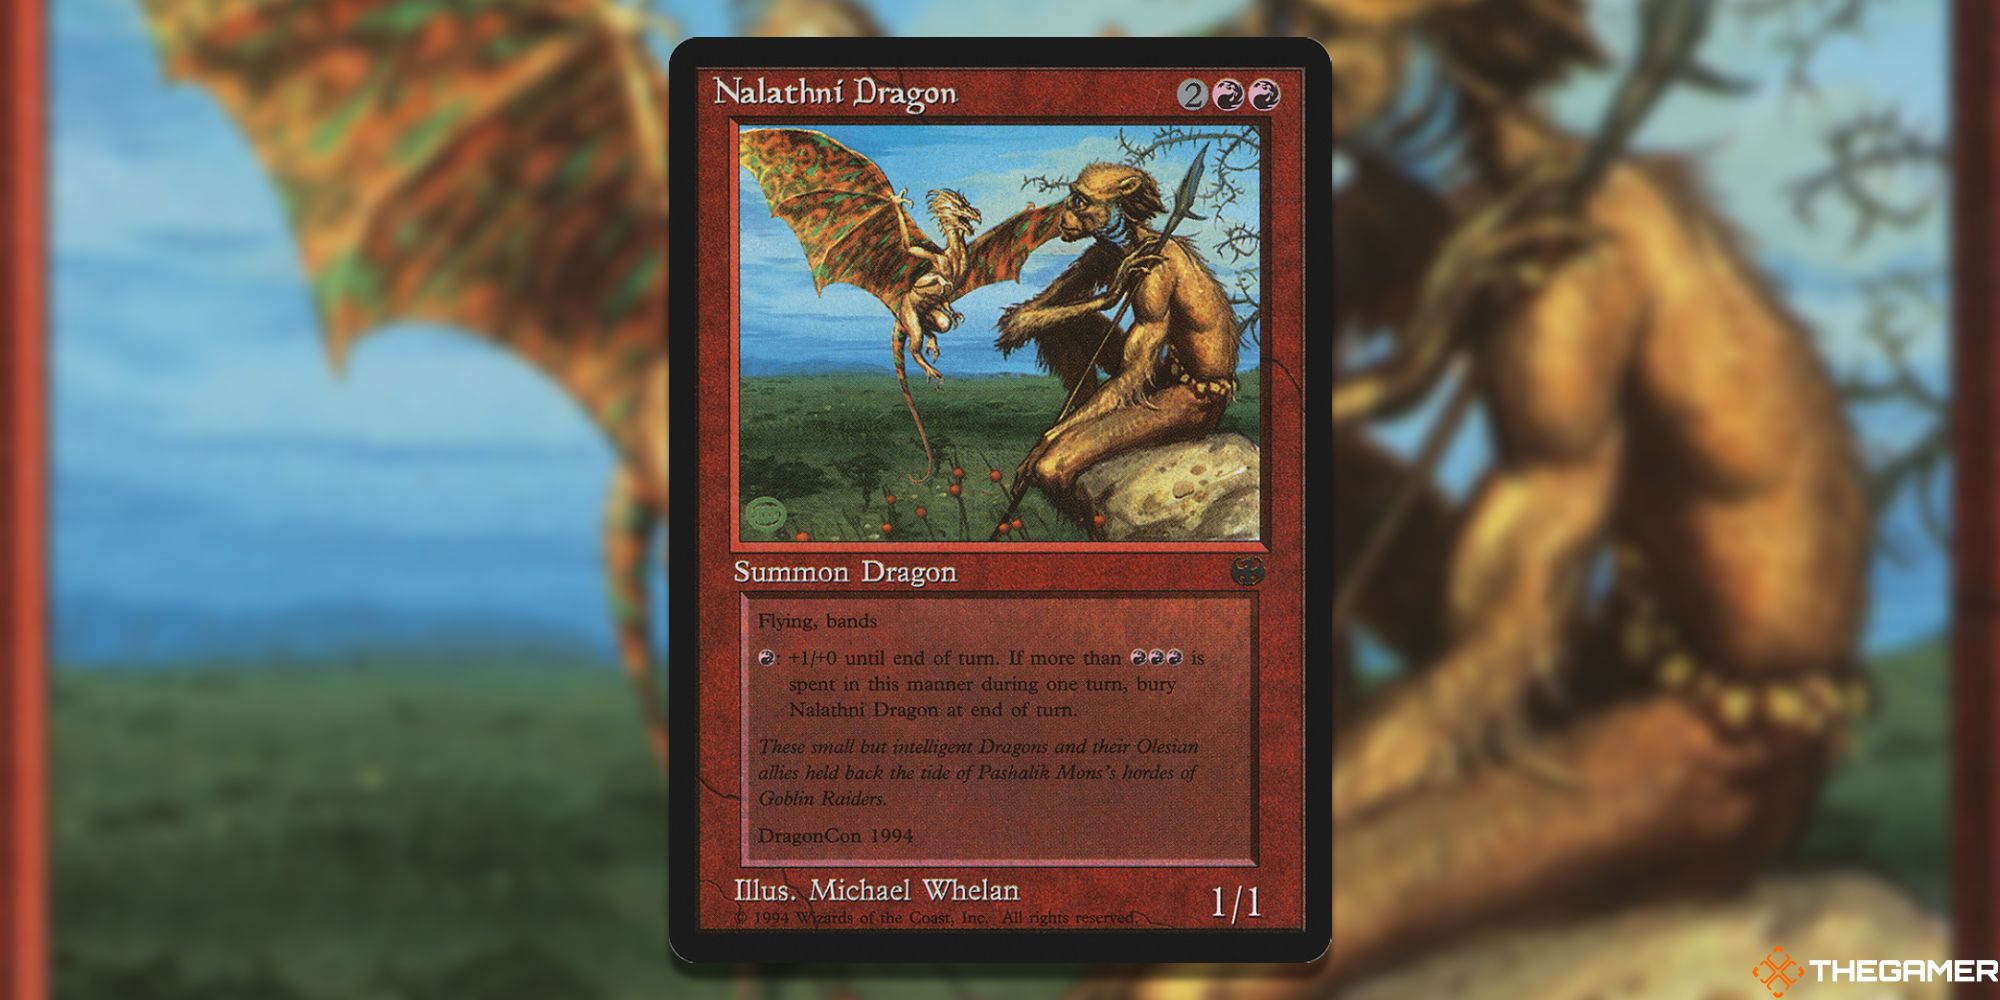 The card Nalathni Dragon from Magic: The Gathering.